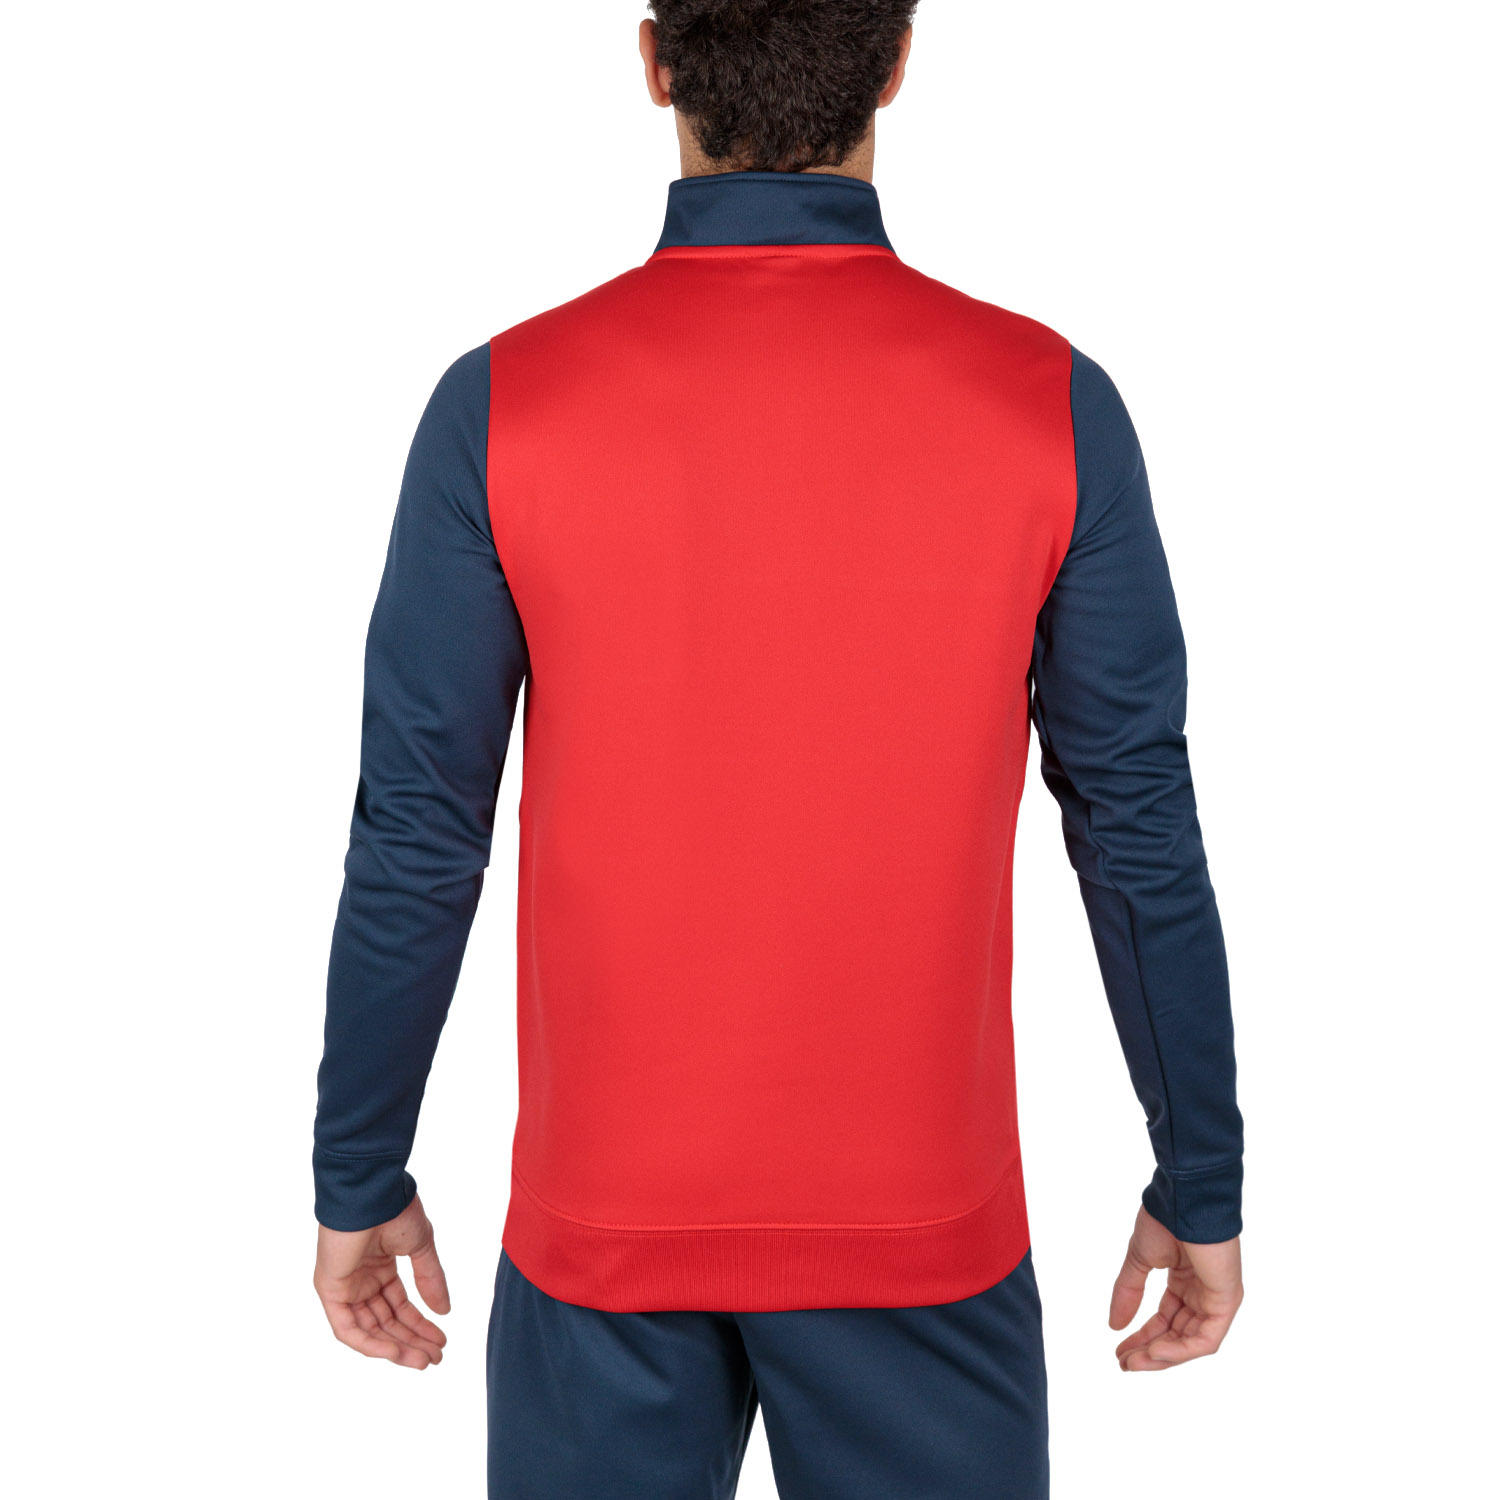 Joma Winner Men's Tennis Shirt - Red/Navy